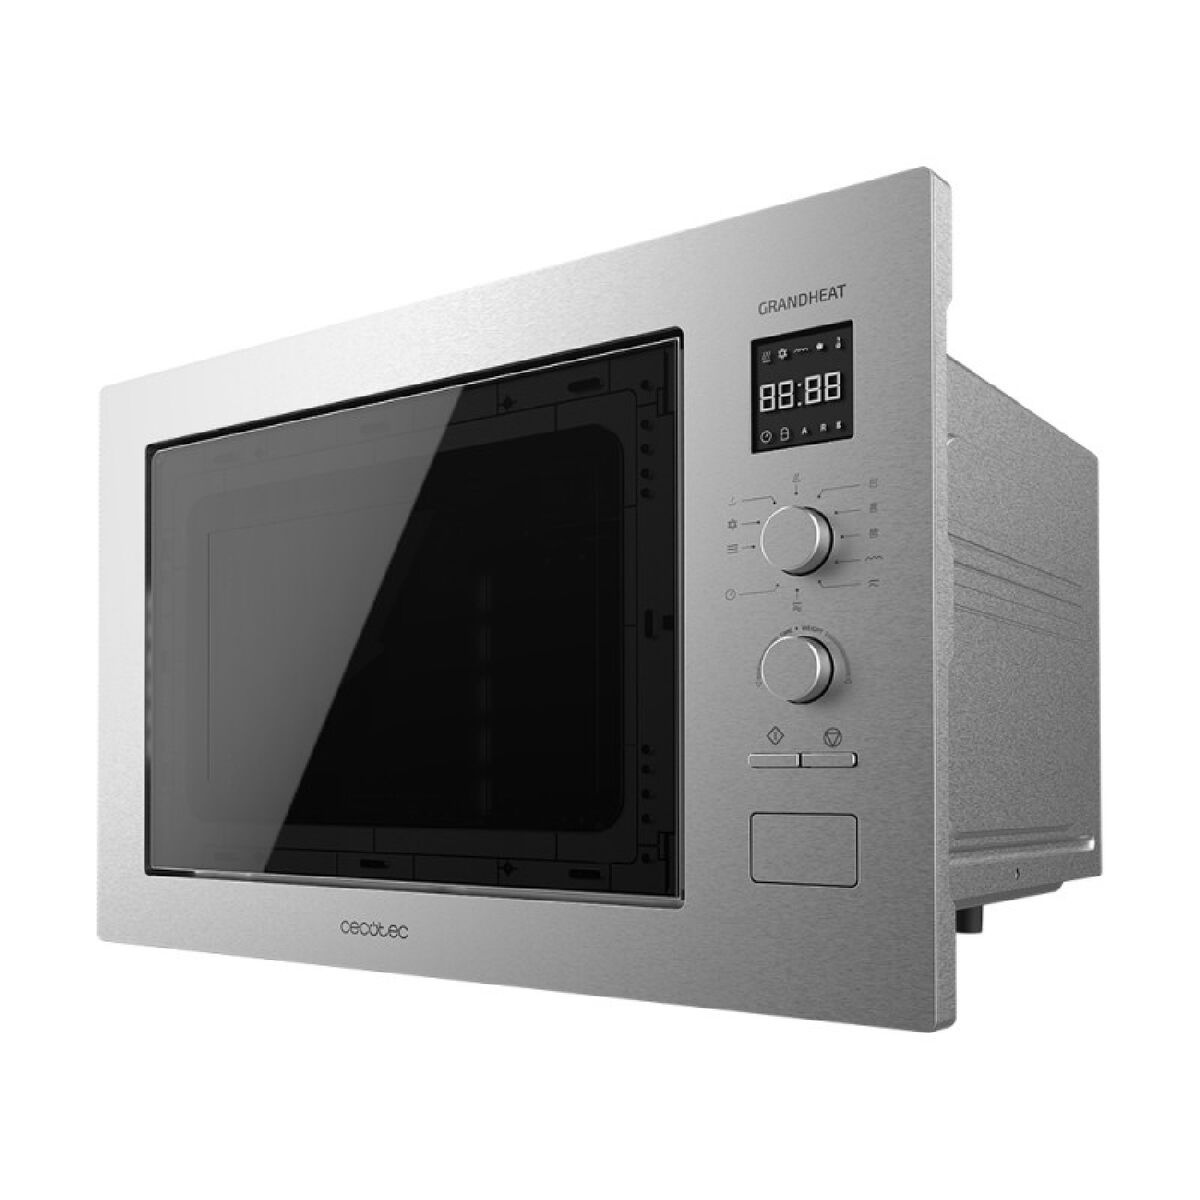 Built-in microwave Cecotec GrandHeat 2550 25 L 1320 W